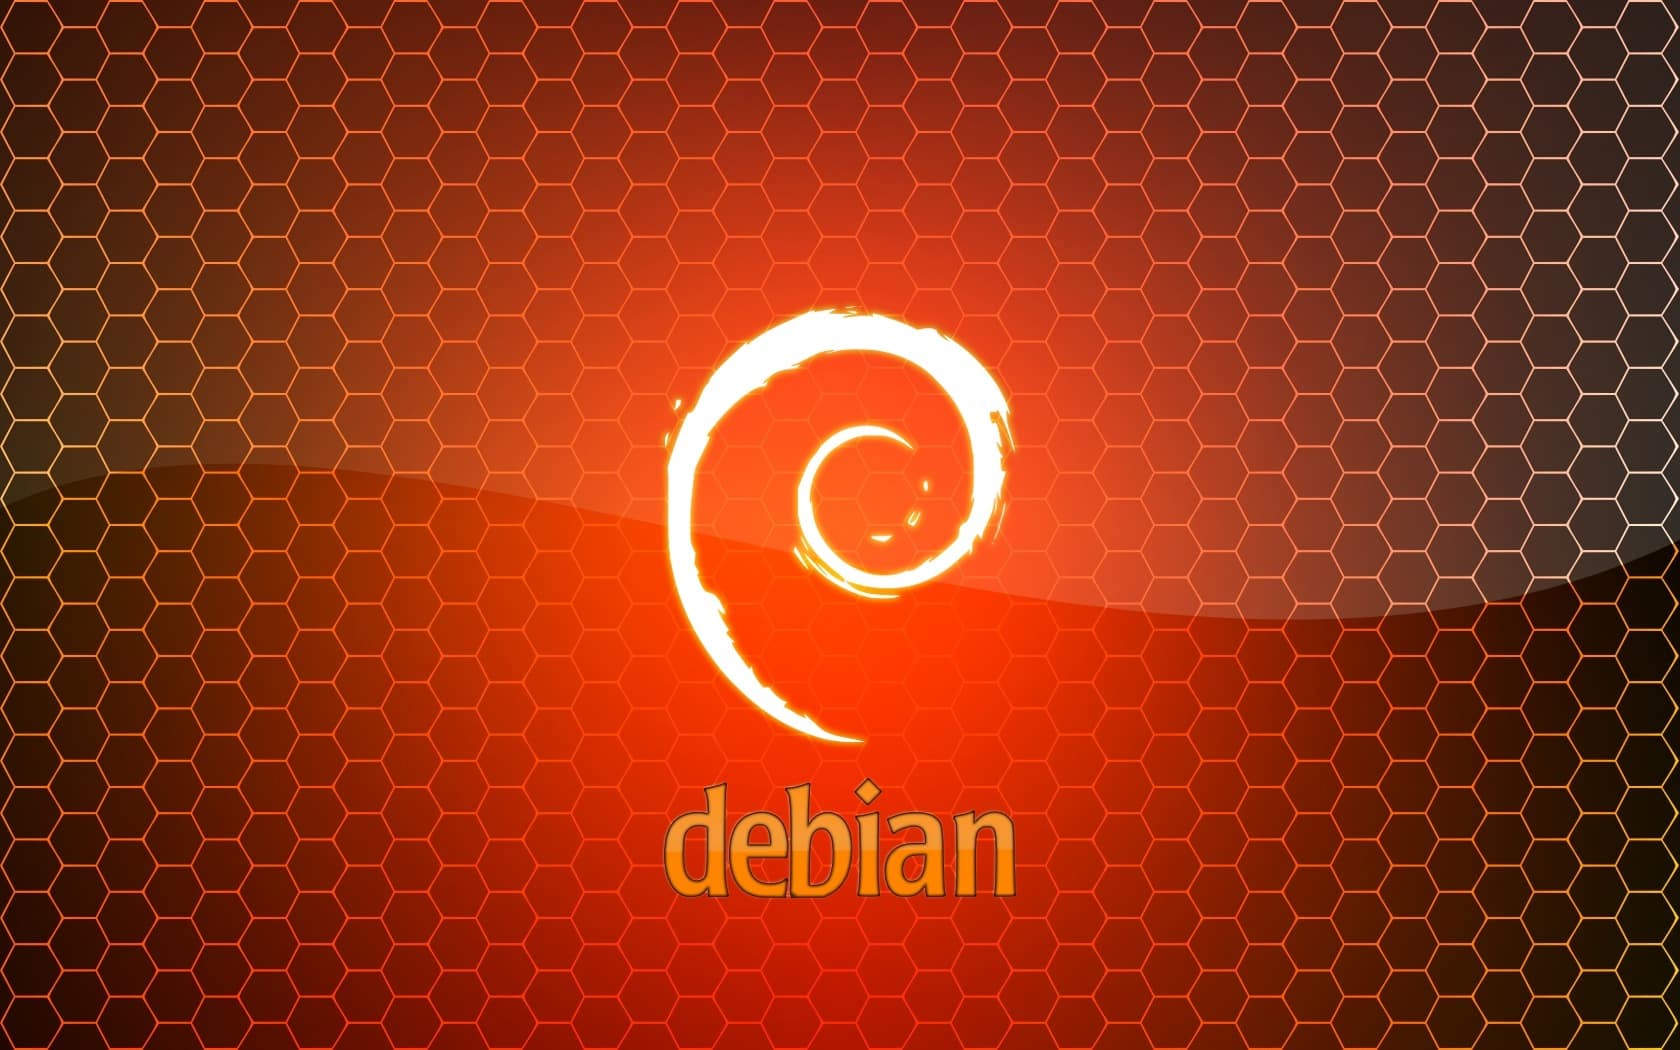 Debian Orange by monkeymagico